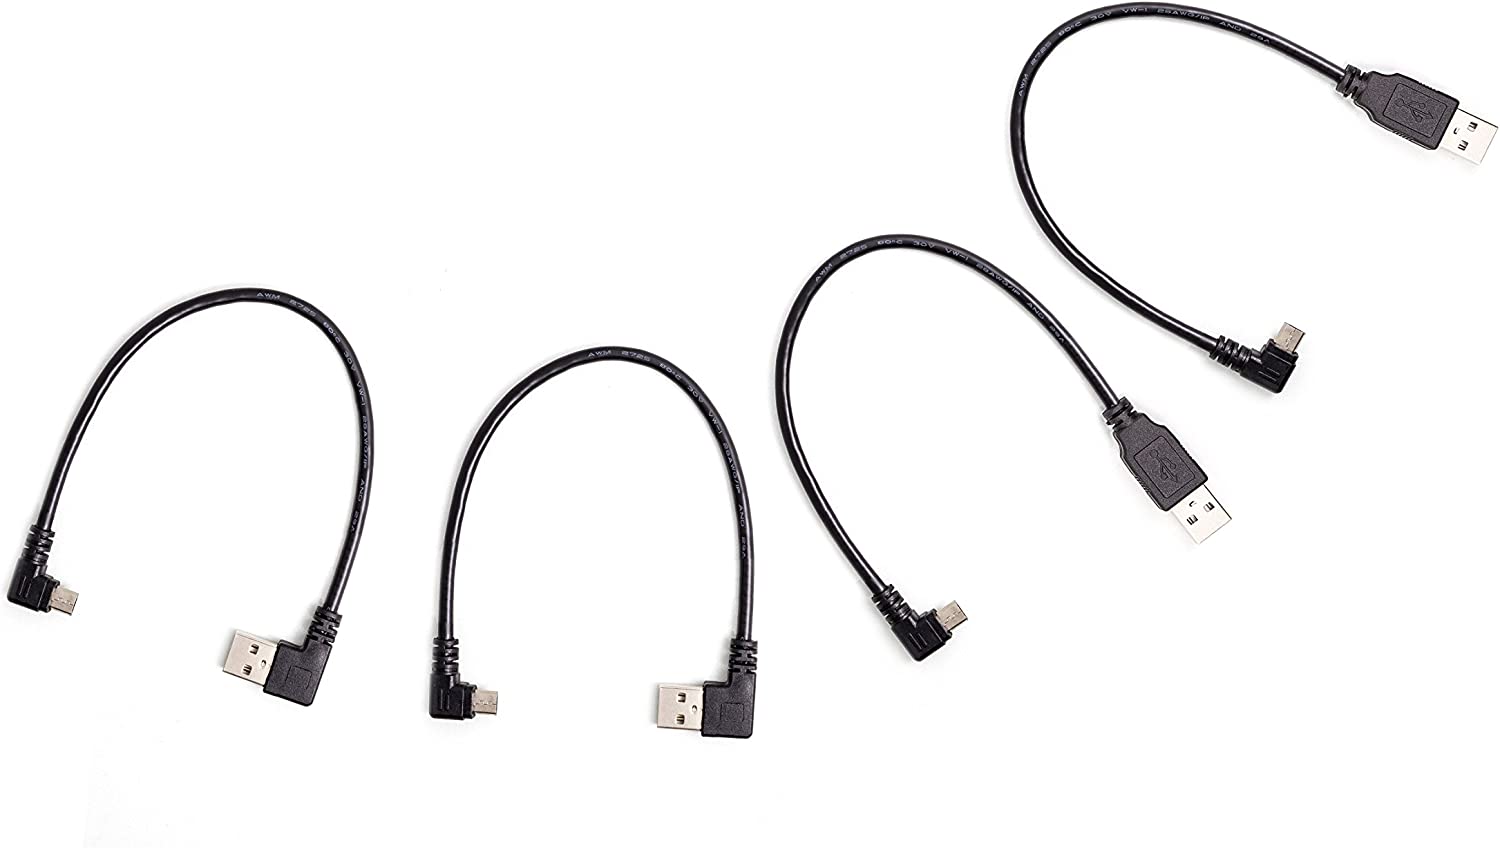 Micro USB ケーブル for Google Chromecast Ultra/Miracast/EZcast <strong>クロームキャスト</strong> オーディオ/テレビ スティッ ドングル <strong>本体</strong> (4本セット) (2969-05)